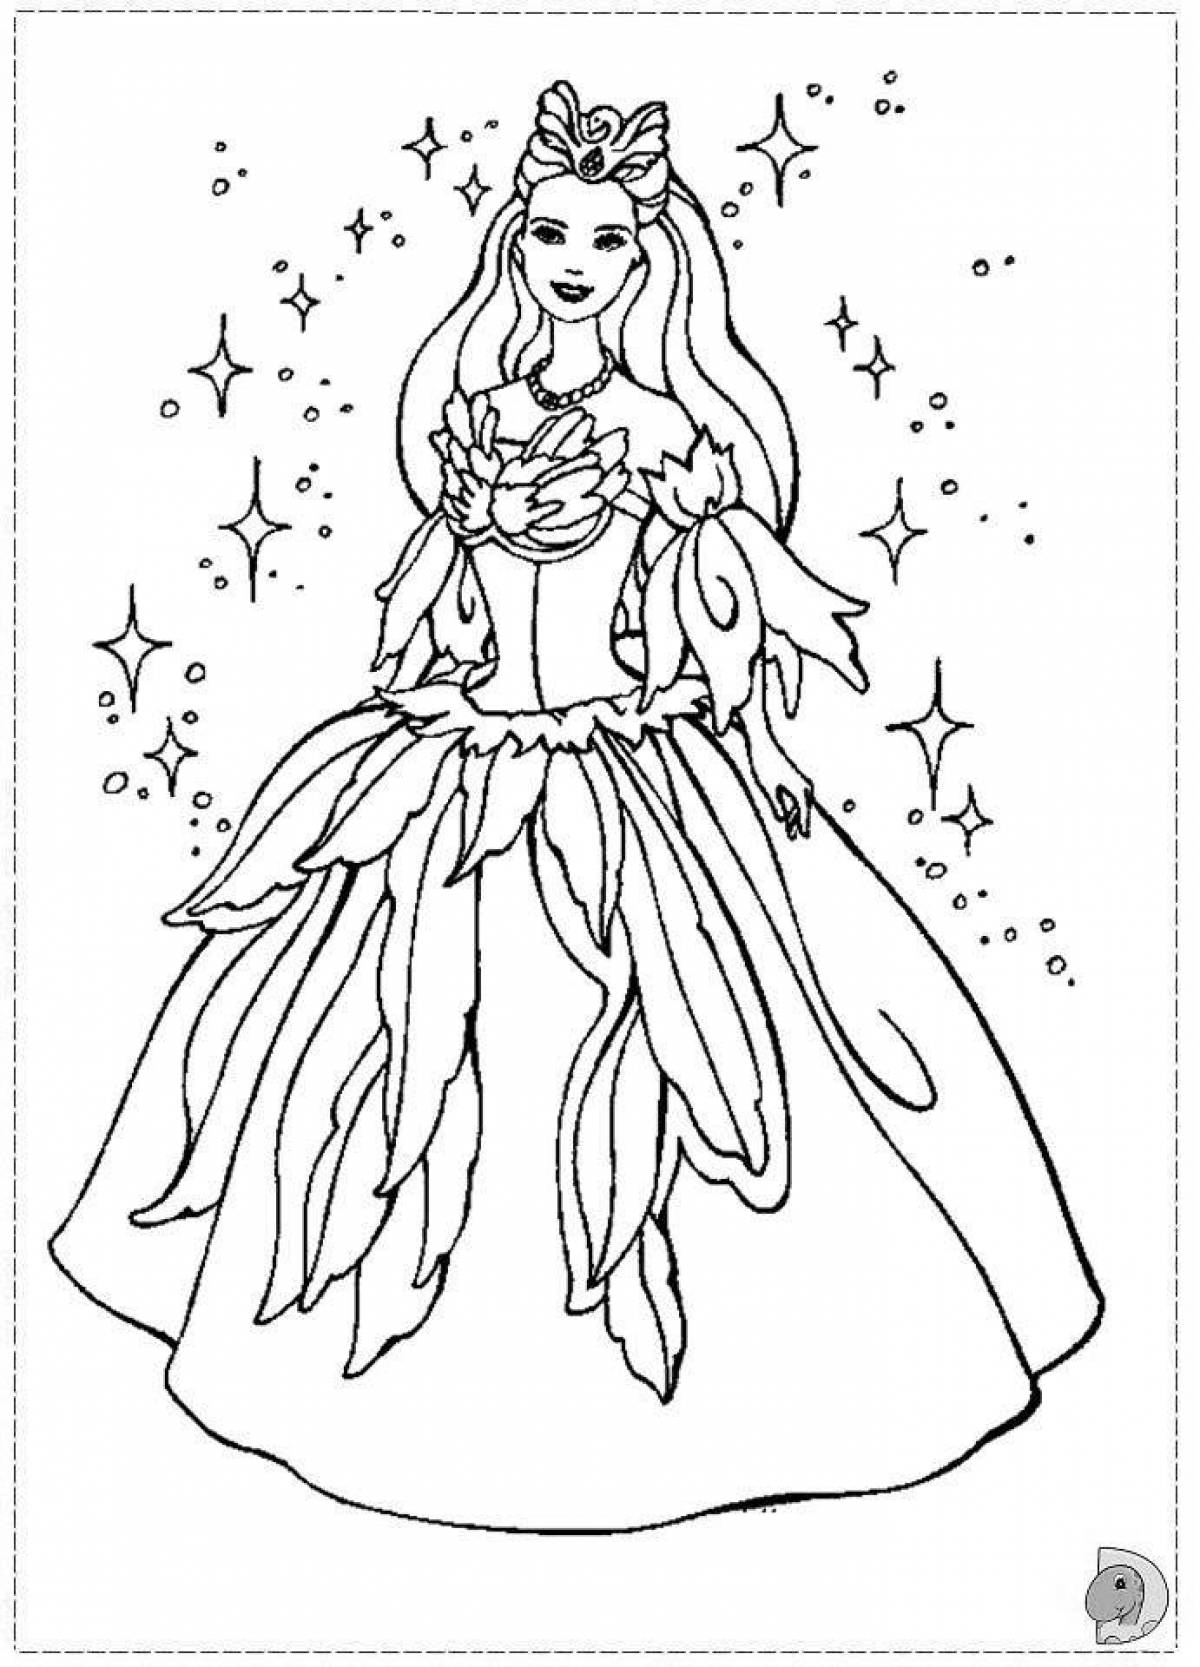 Coloring book joyful barbie princess